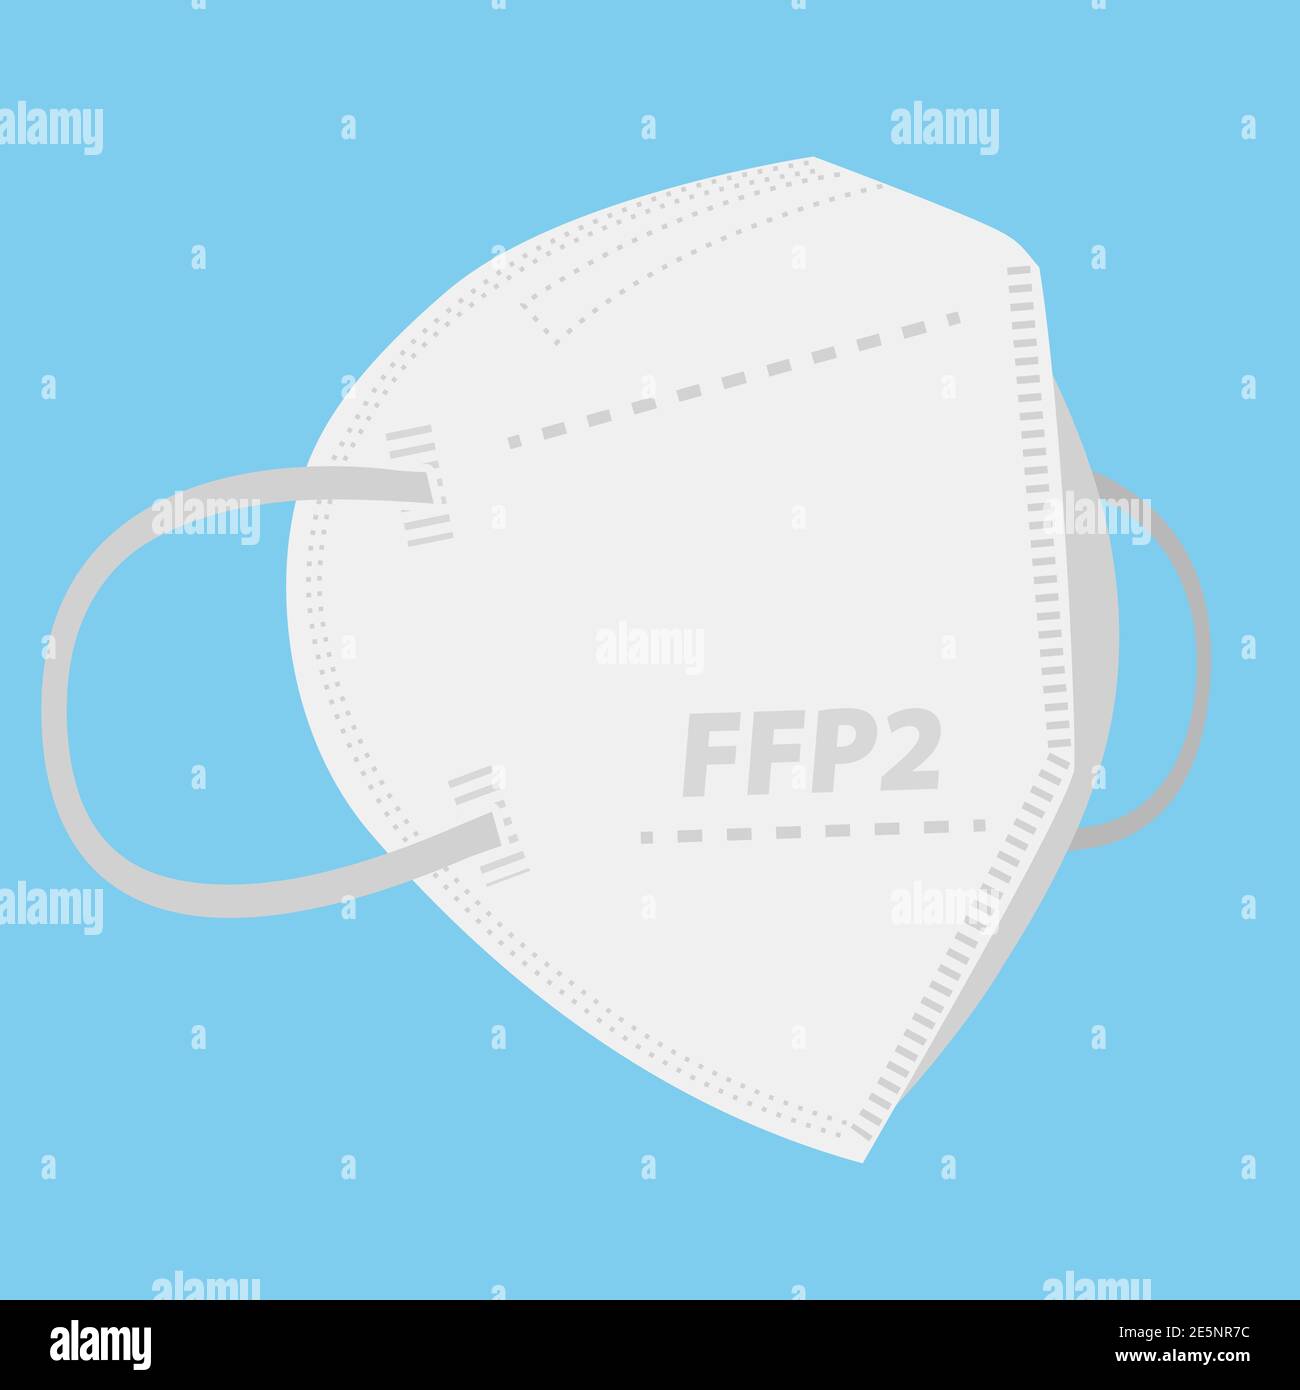 FFP2 respirator face mask on blue background vector illustration Stock Vector